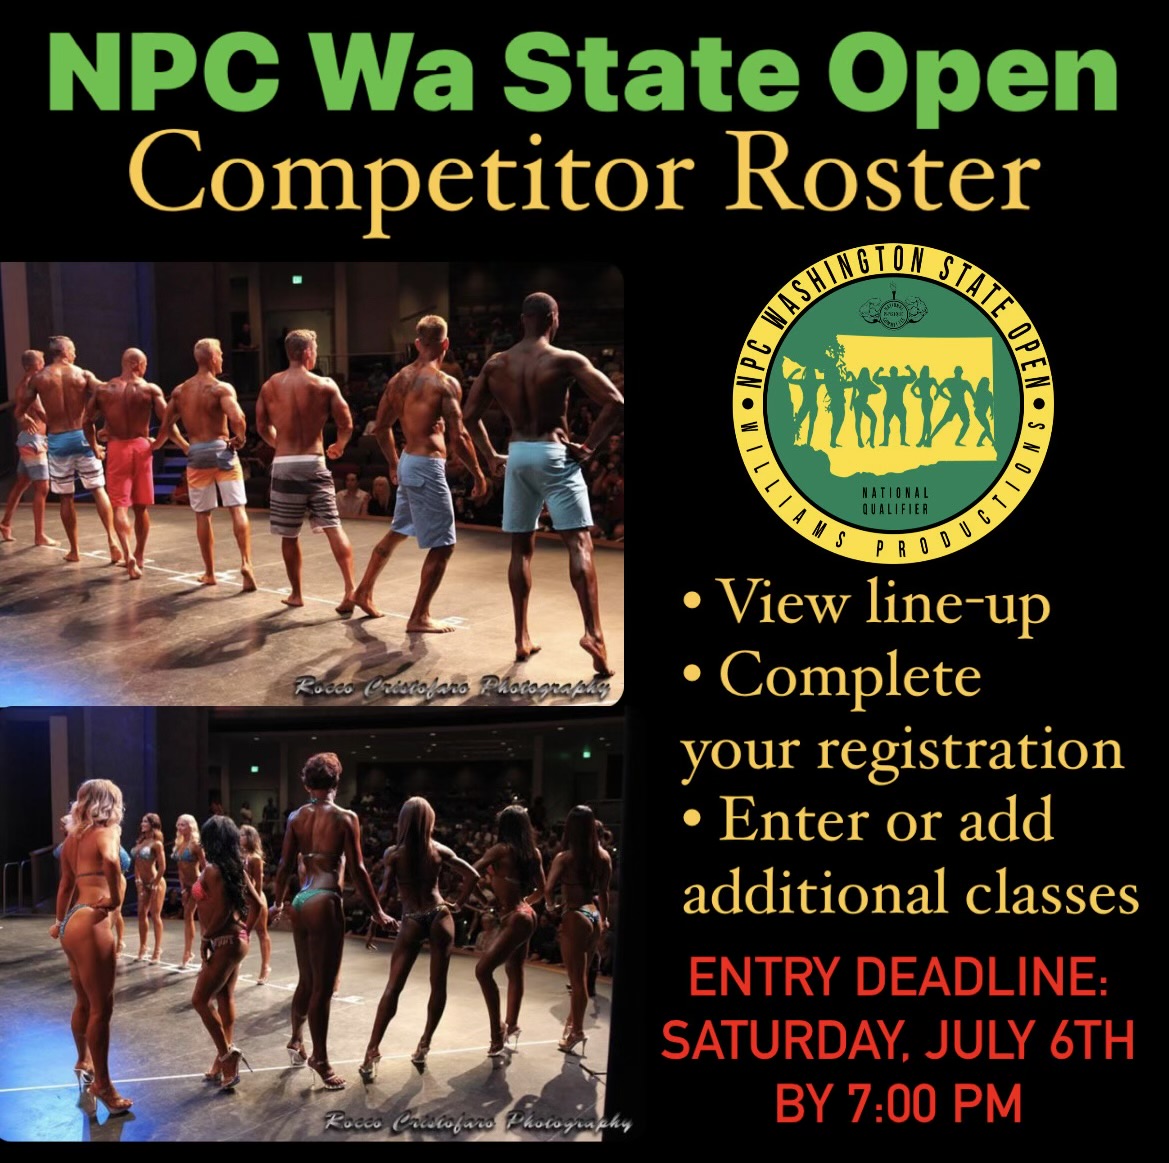 NPC WA State Open Competitor Roster